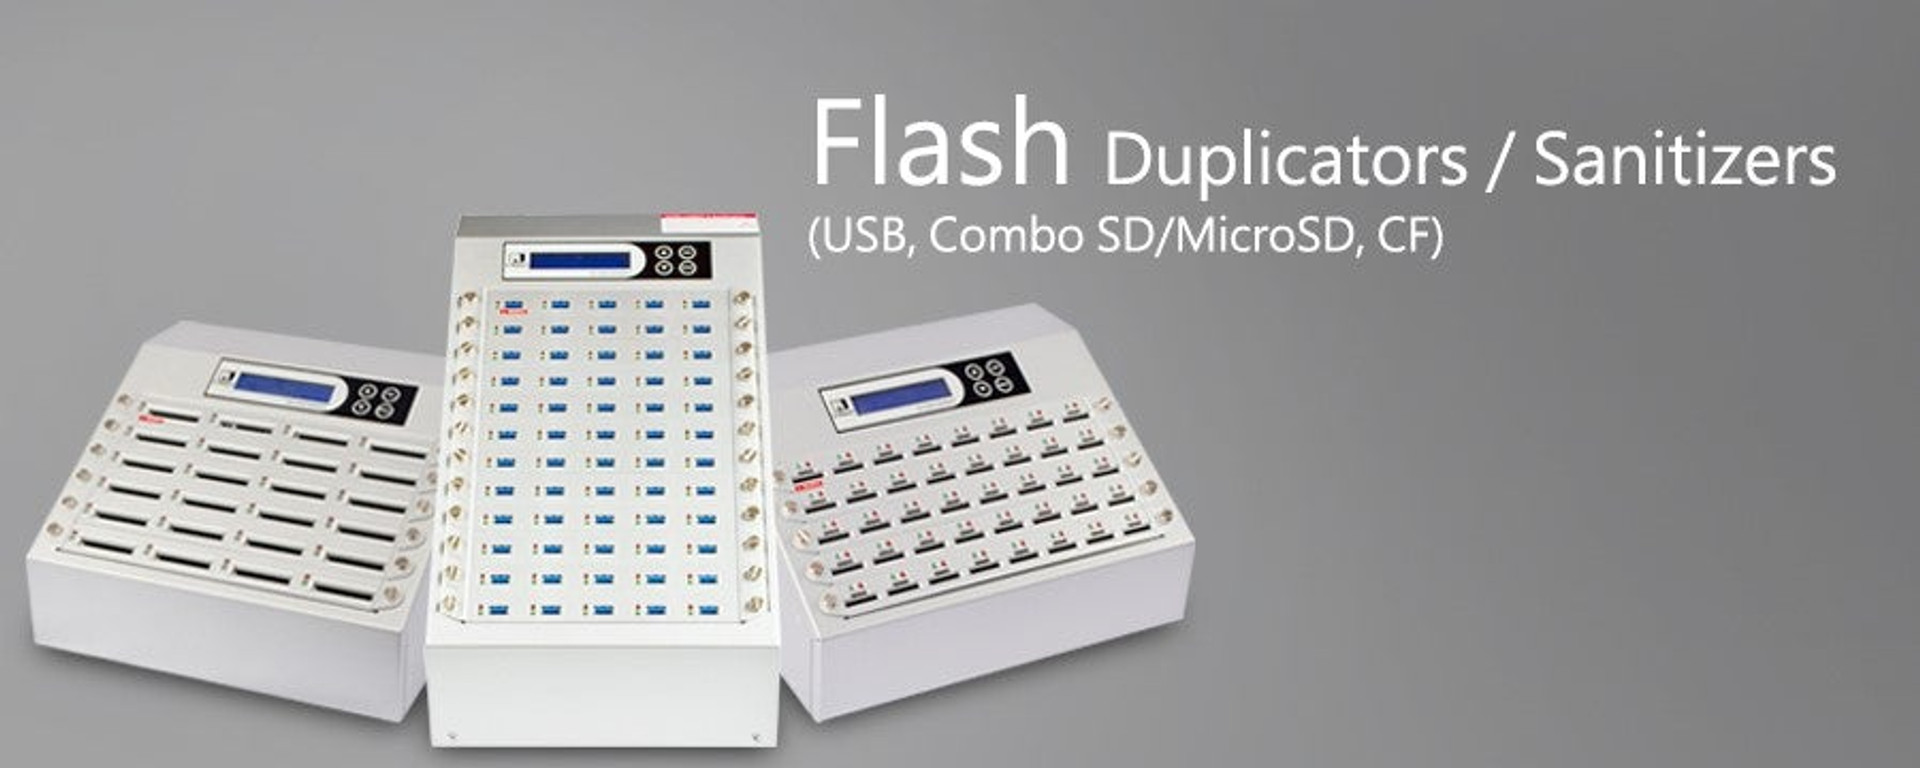 Flash Duplicators / Sanitizers